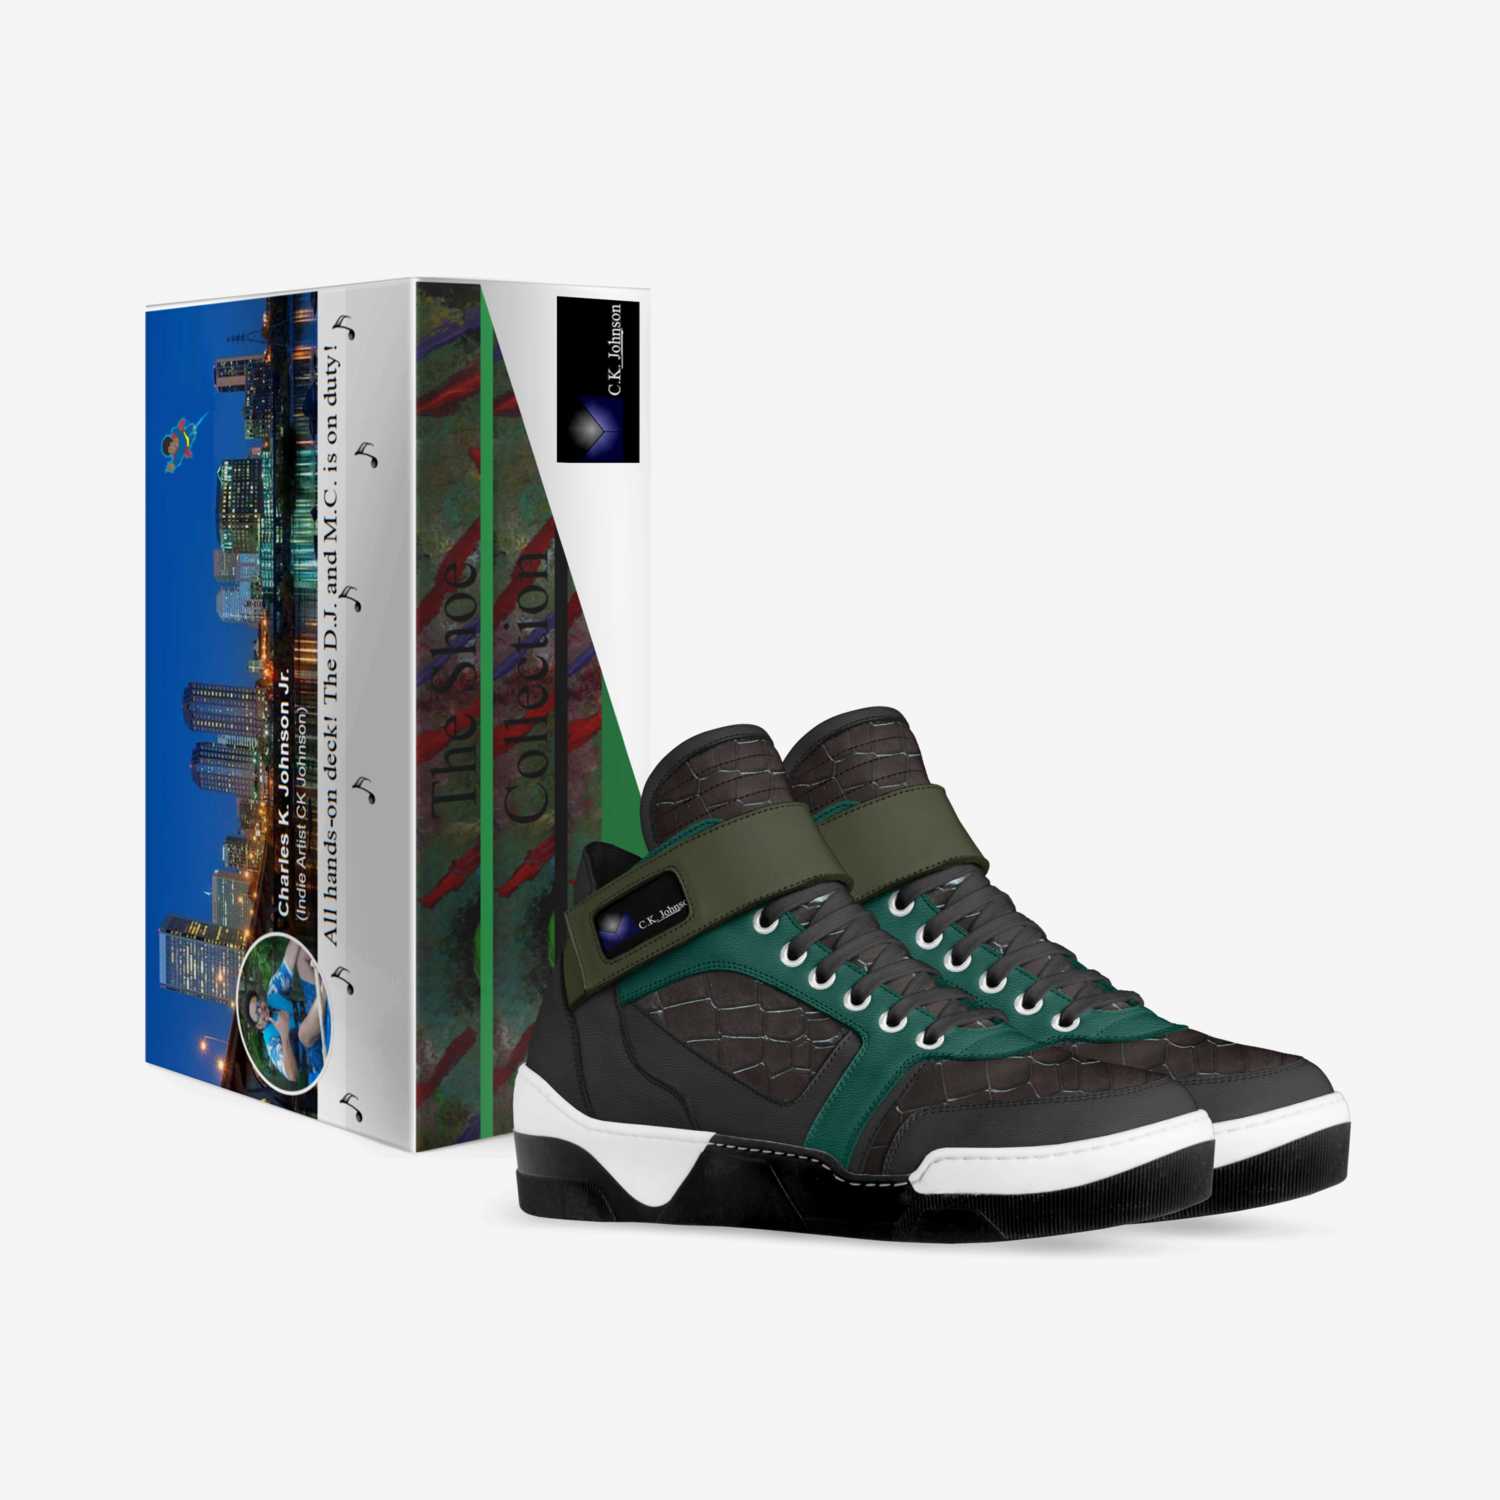 Godzilla's custom made in Italy shoes by Charles K. Johnson, Jr. | Box view